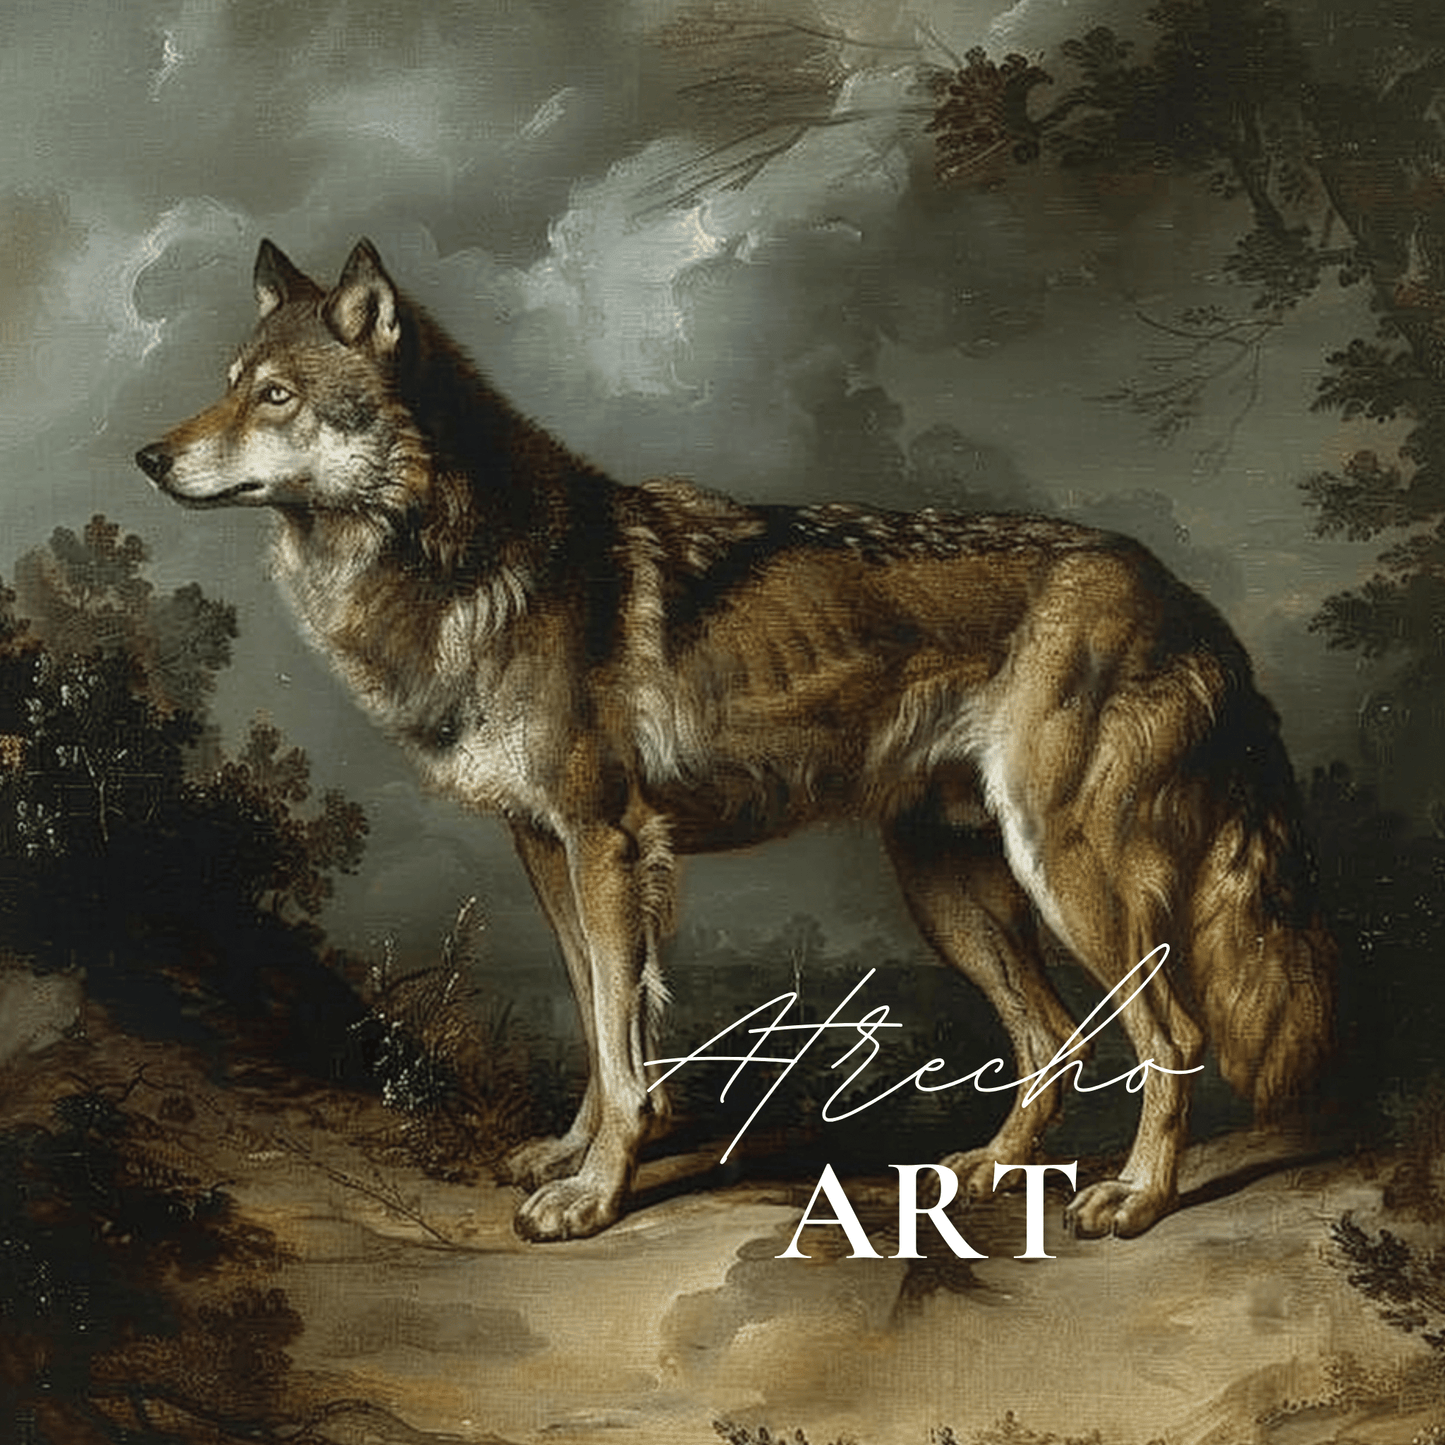 IBERIAN WOLF | Printed Artwork | AN04